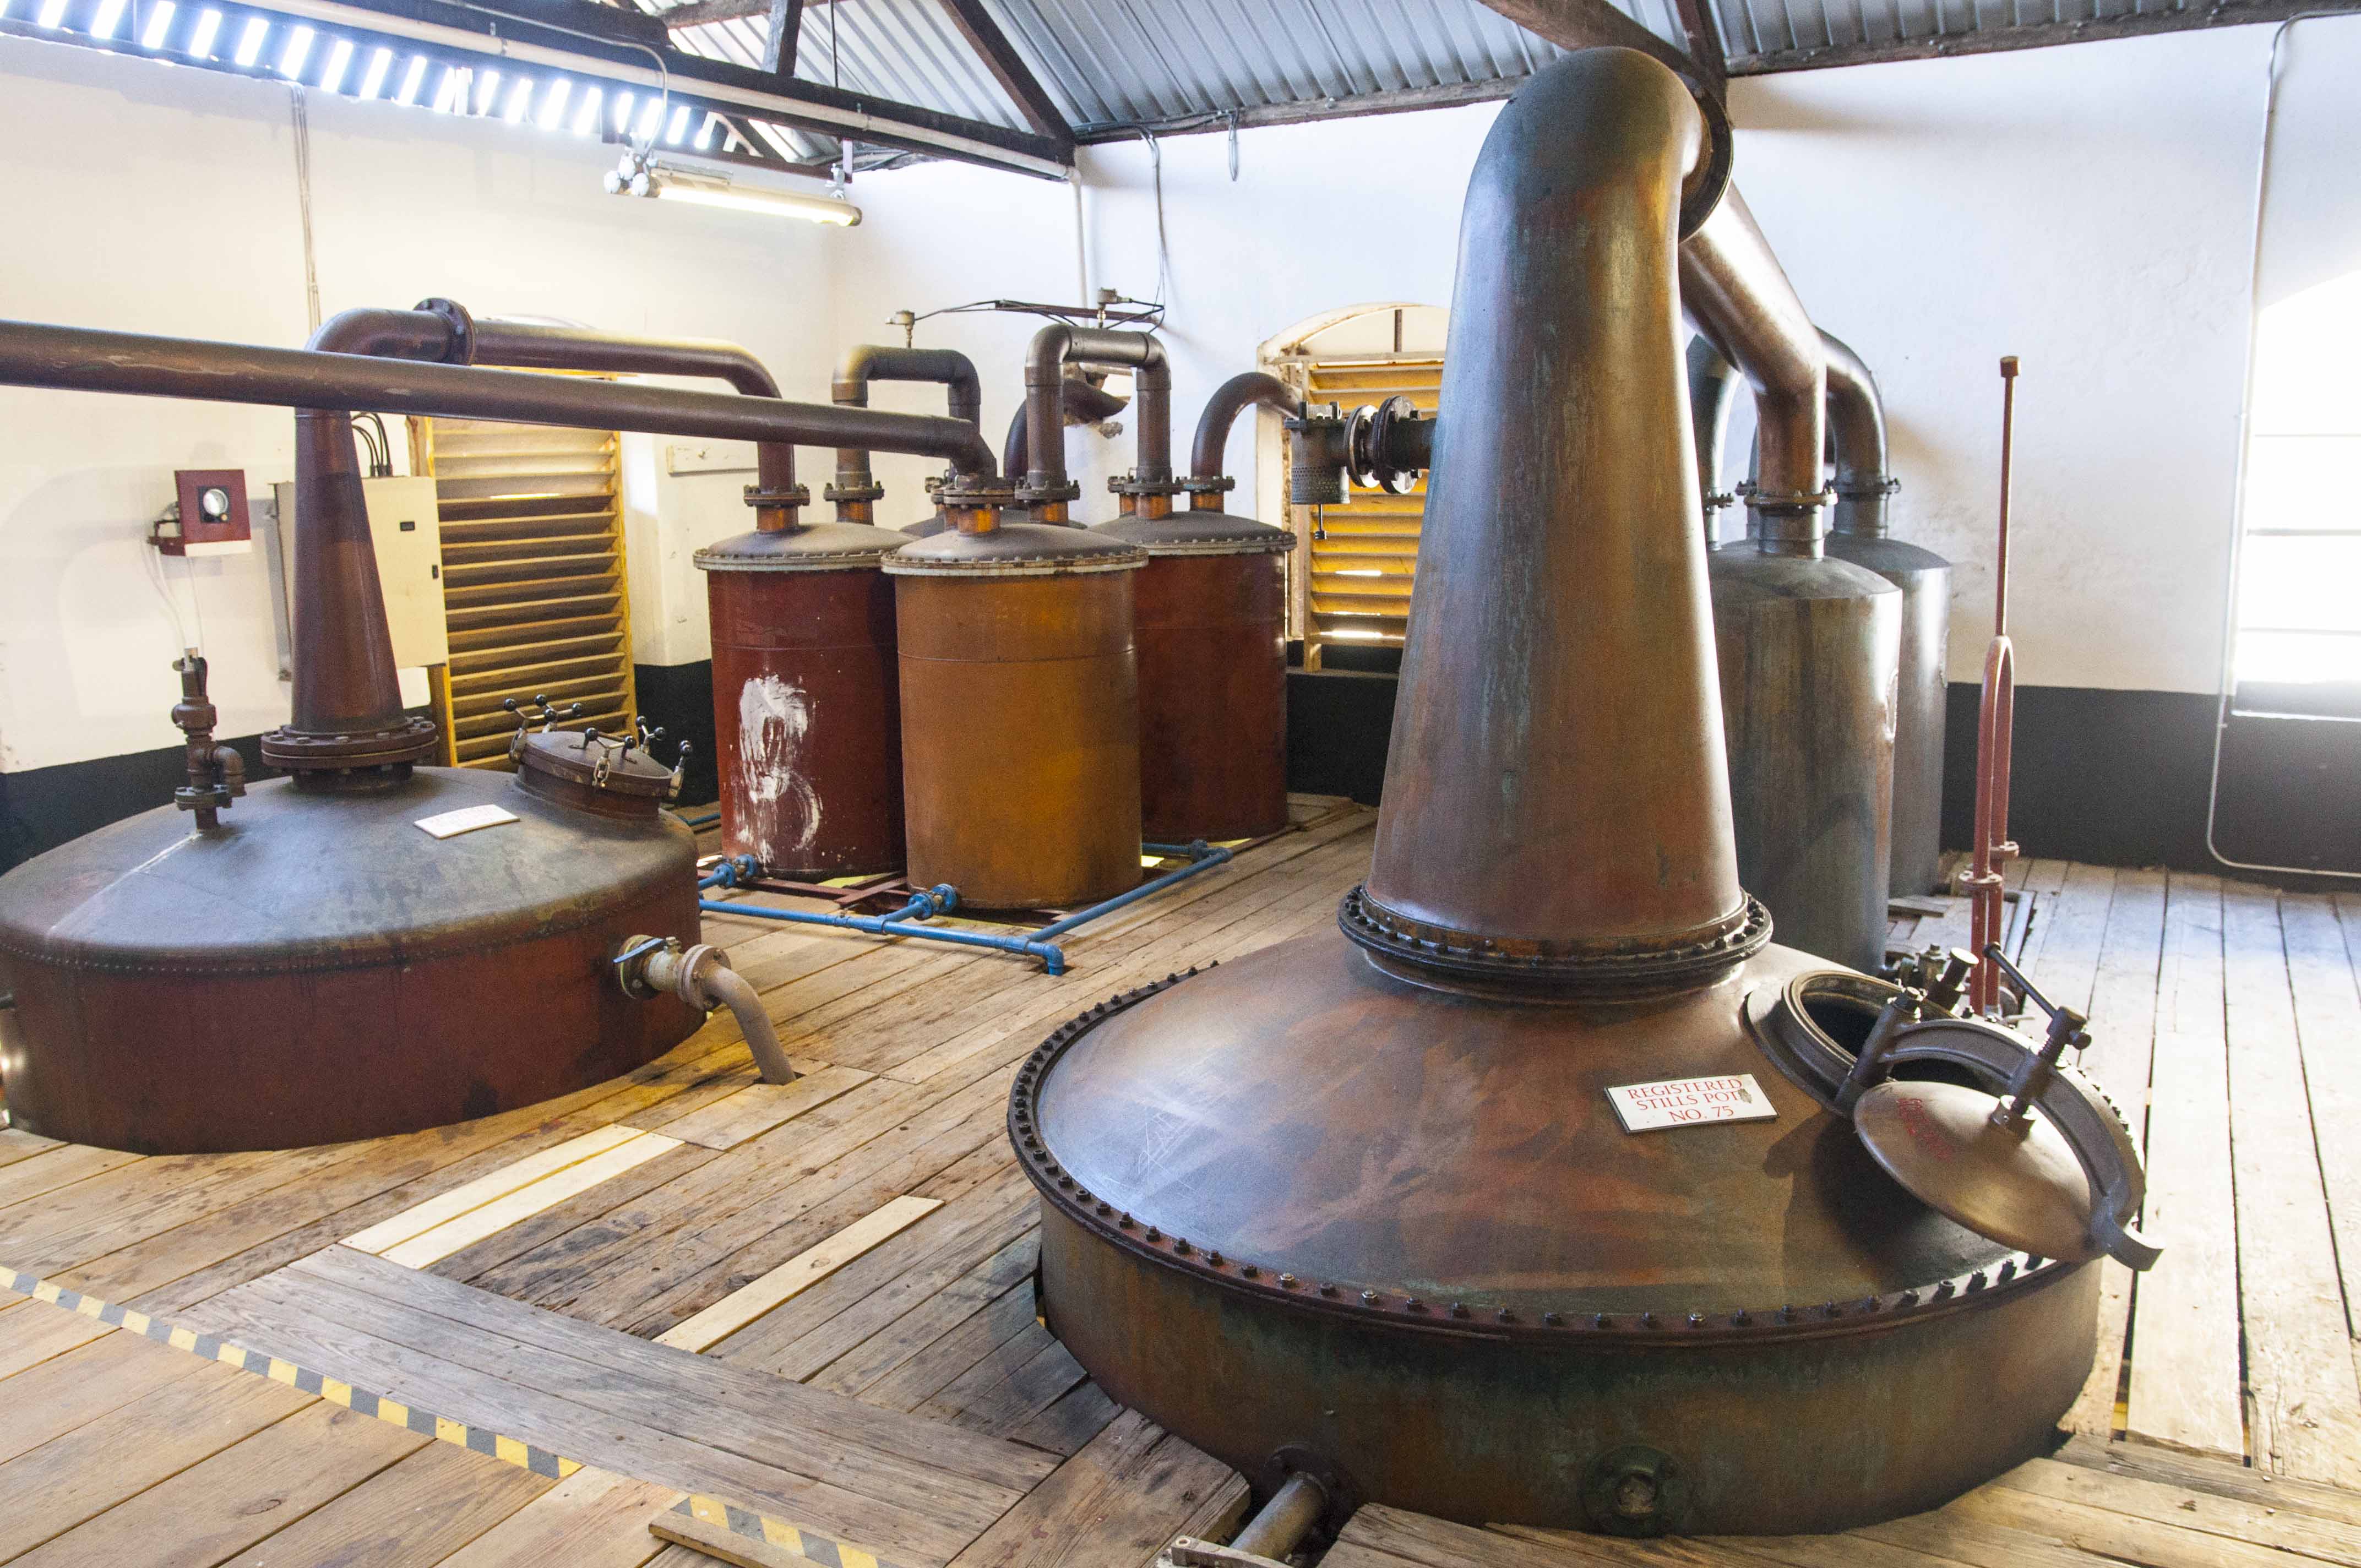  Pot still  destillering Hvordan fungerer metoden Romhatten